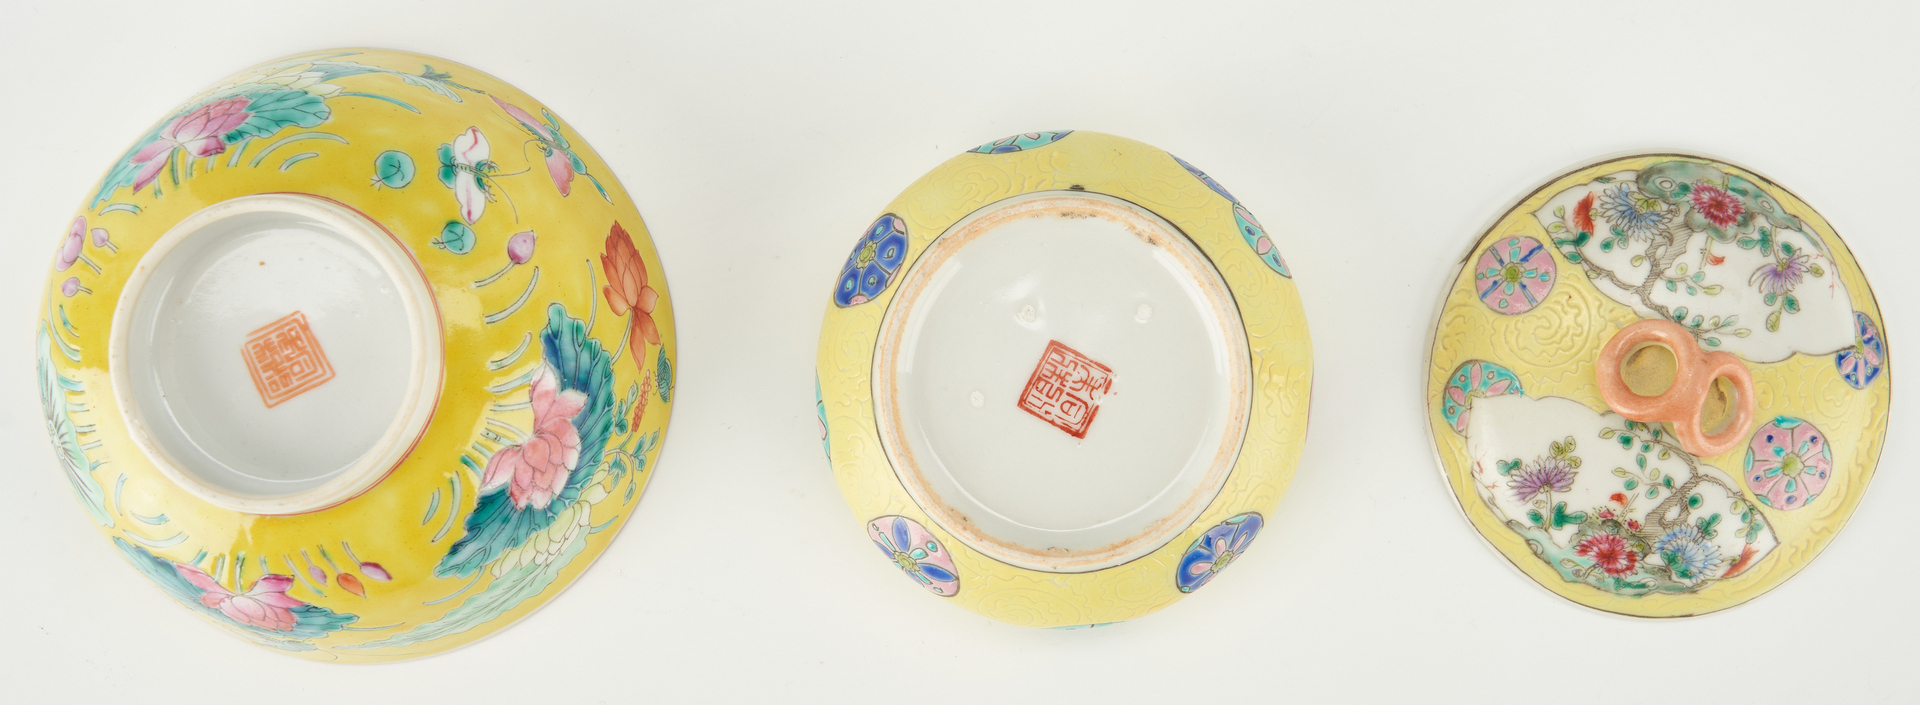 Lot 1094: 3 Chinese Porcelain Items, incl. Tongzhi Bowl